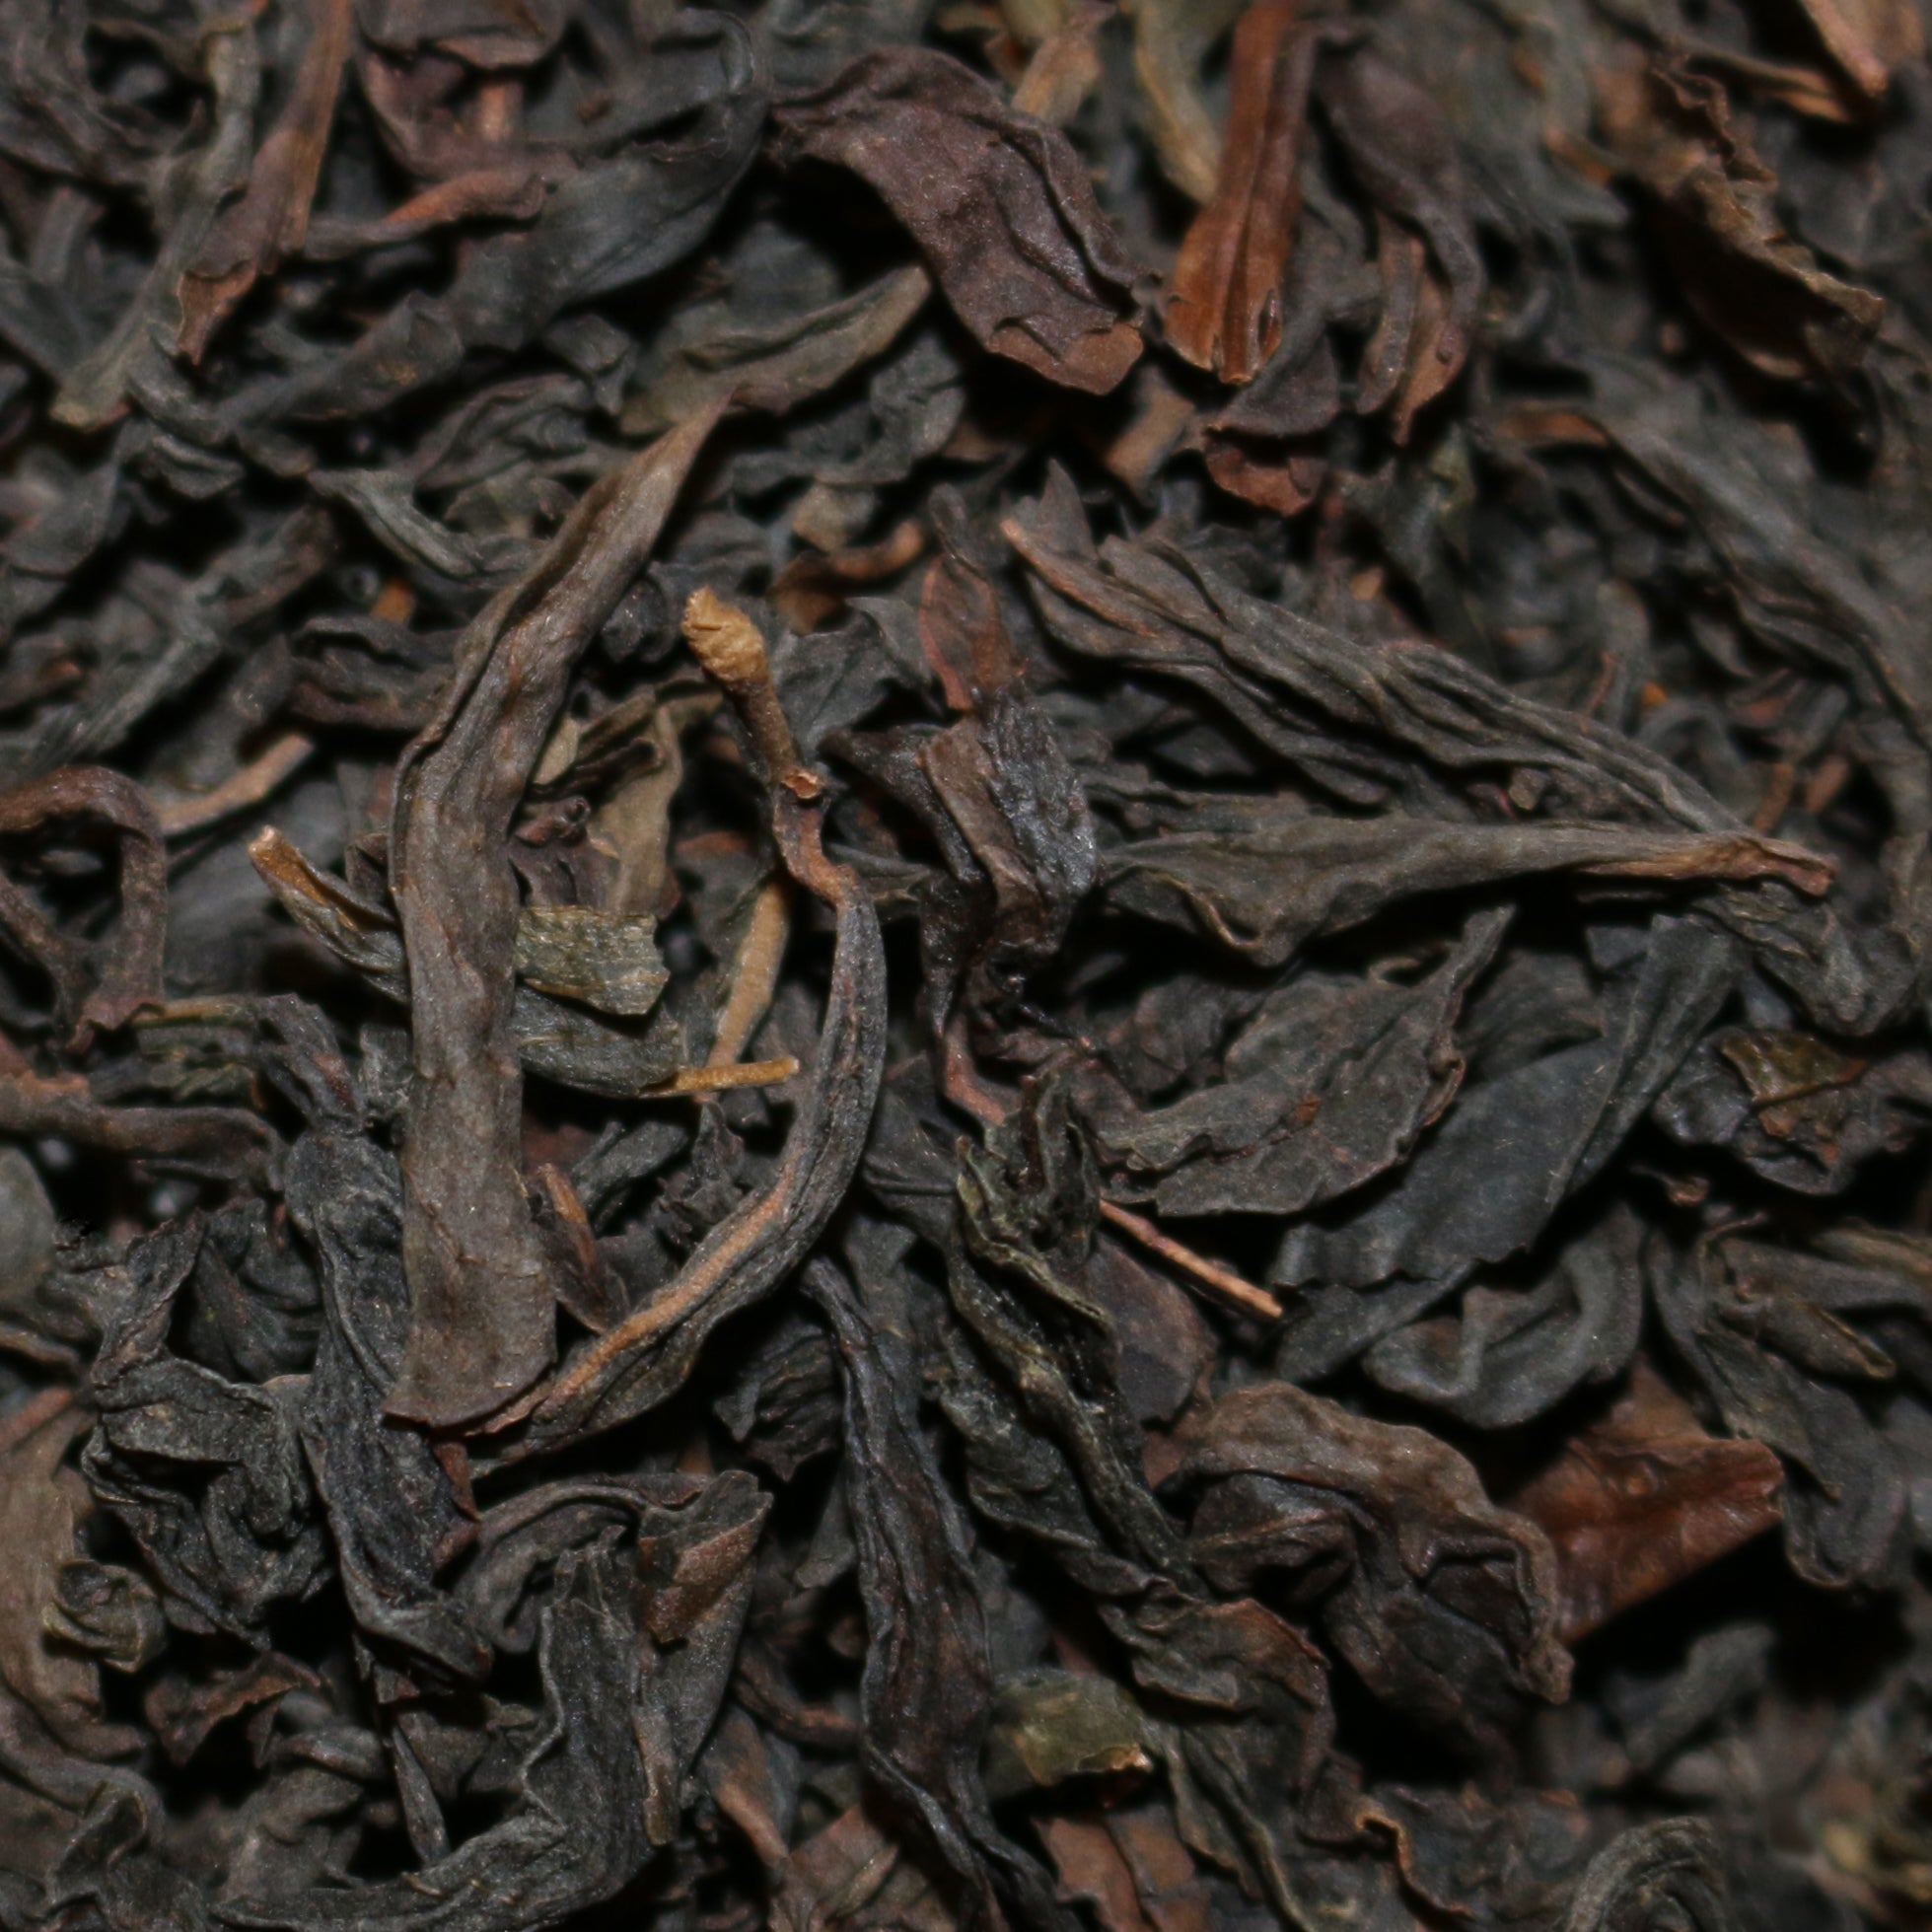 Wu Yi Large Leaf China Black Tea